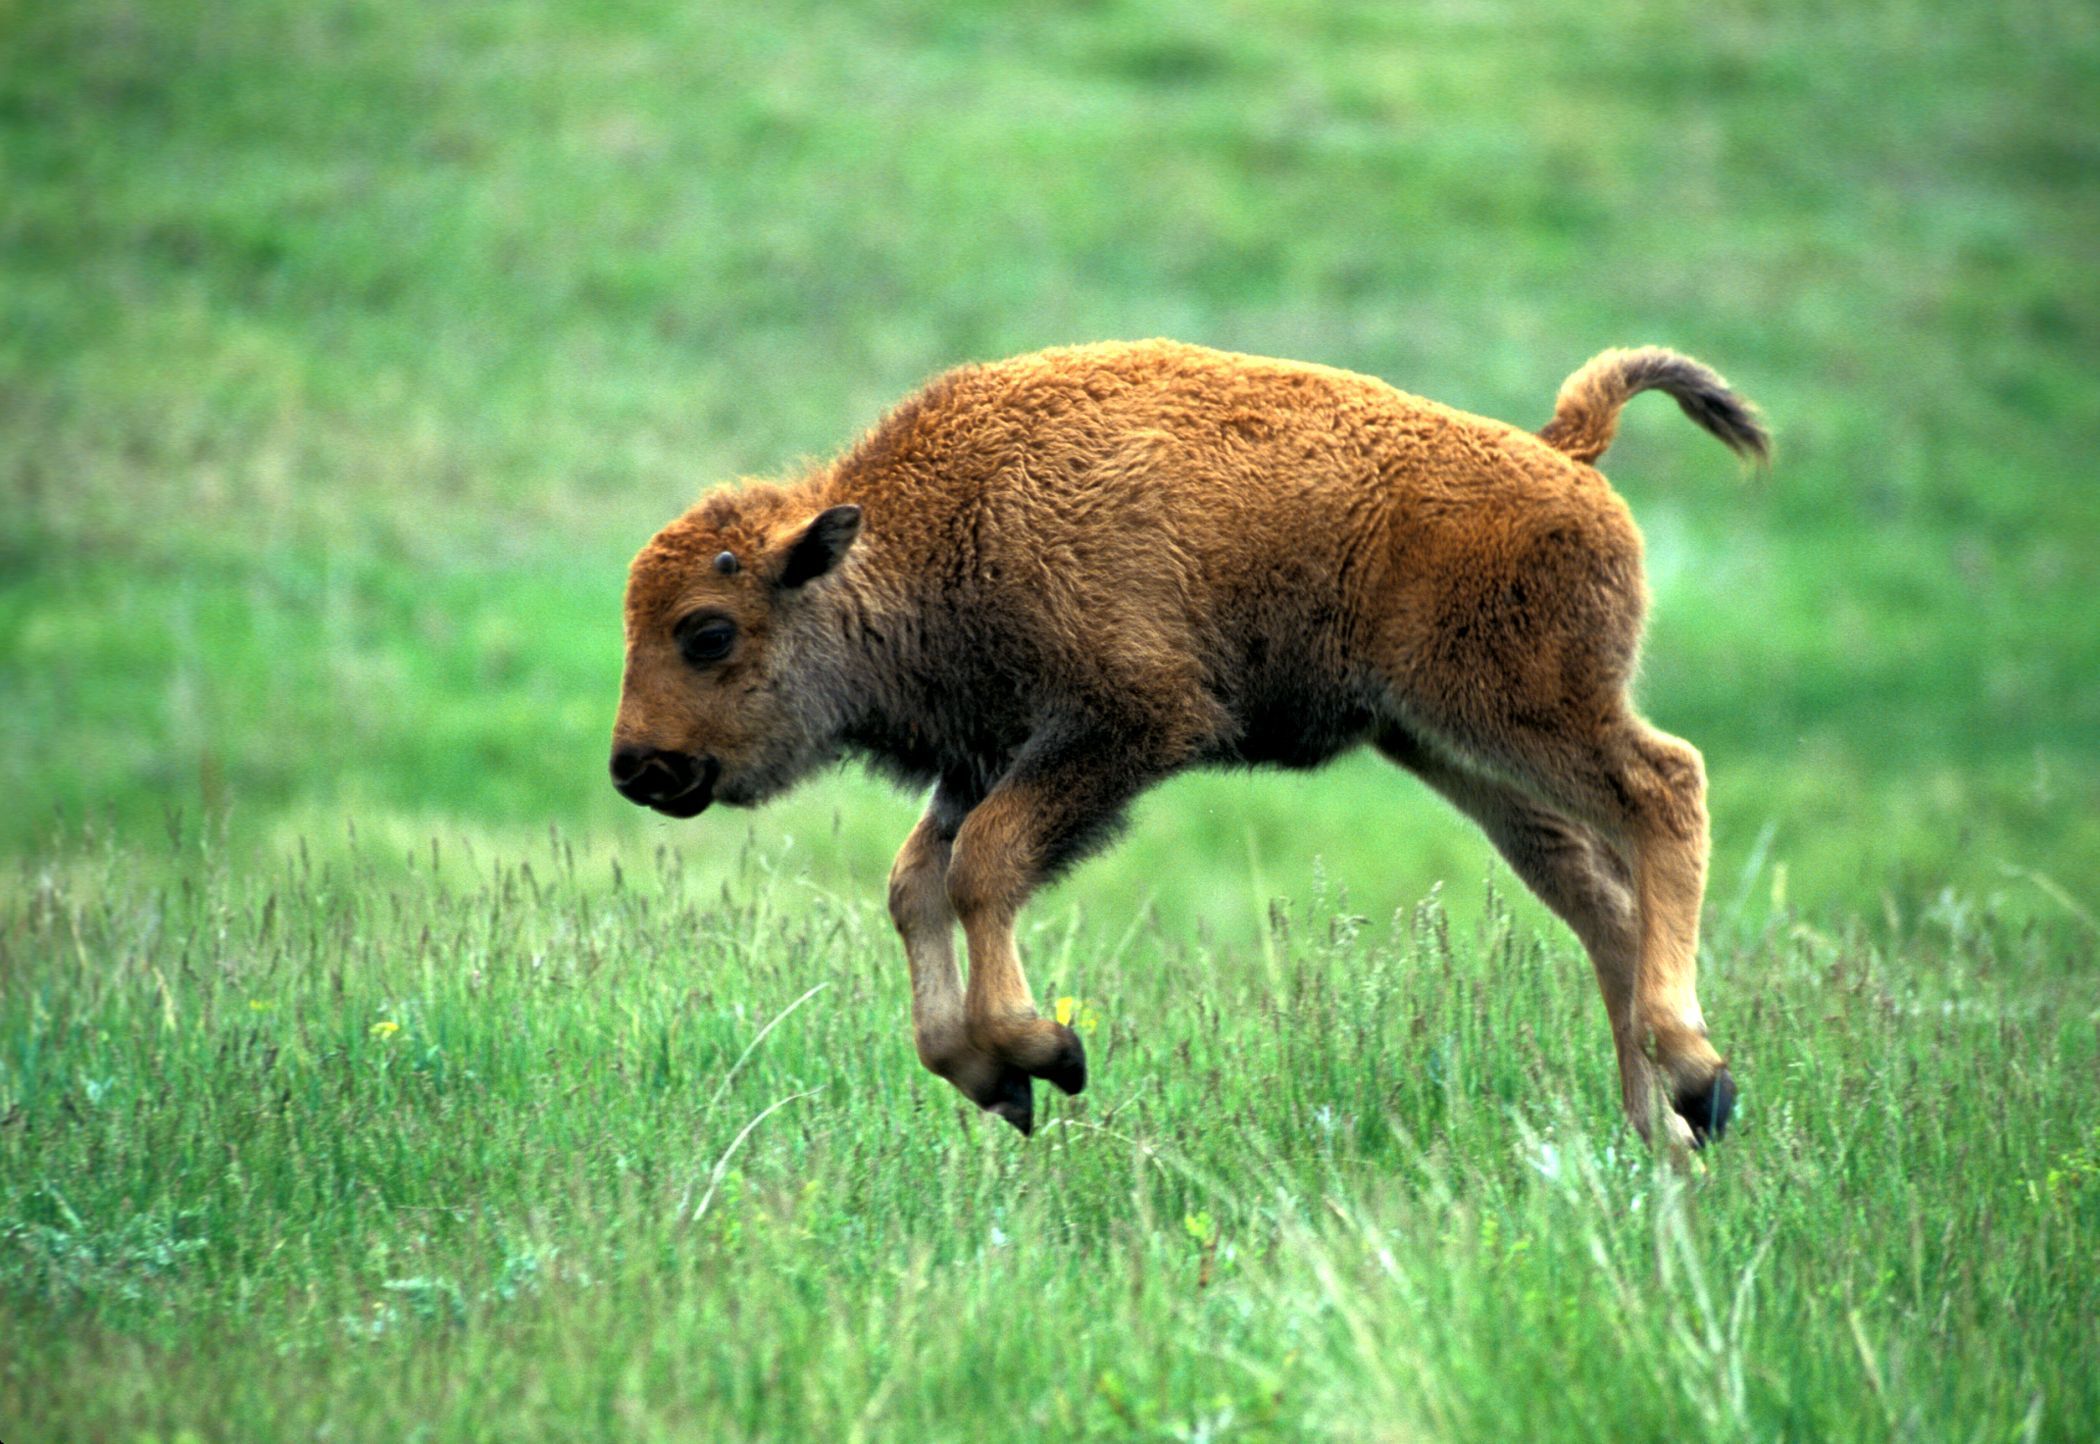 Baby Bison. Baby wild animals, Baby bison, Baby buffalo